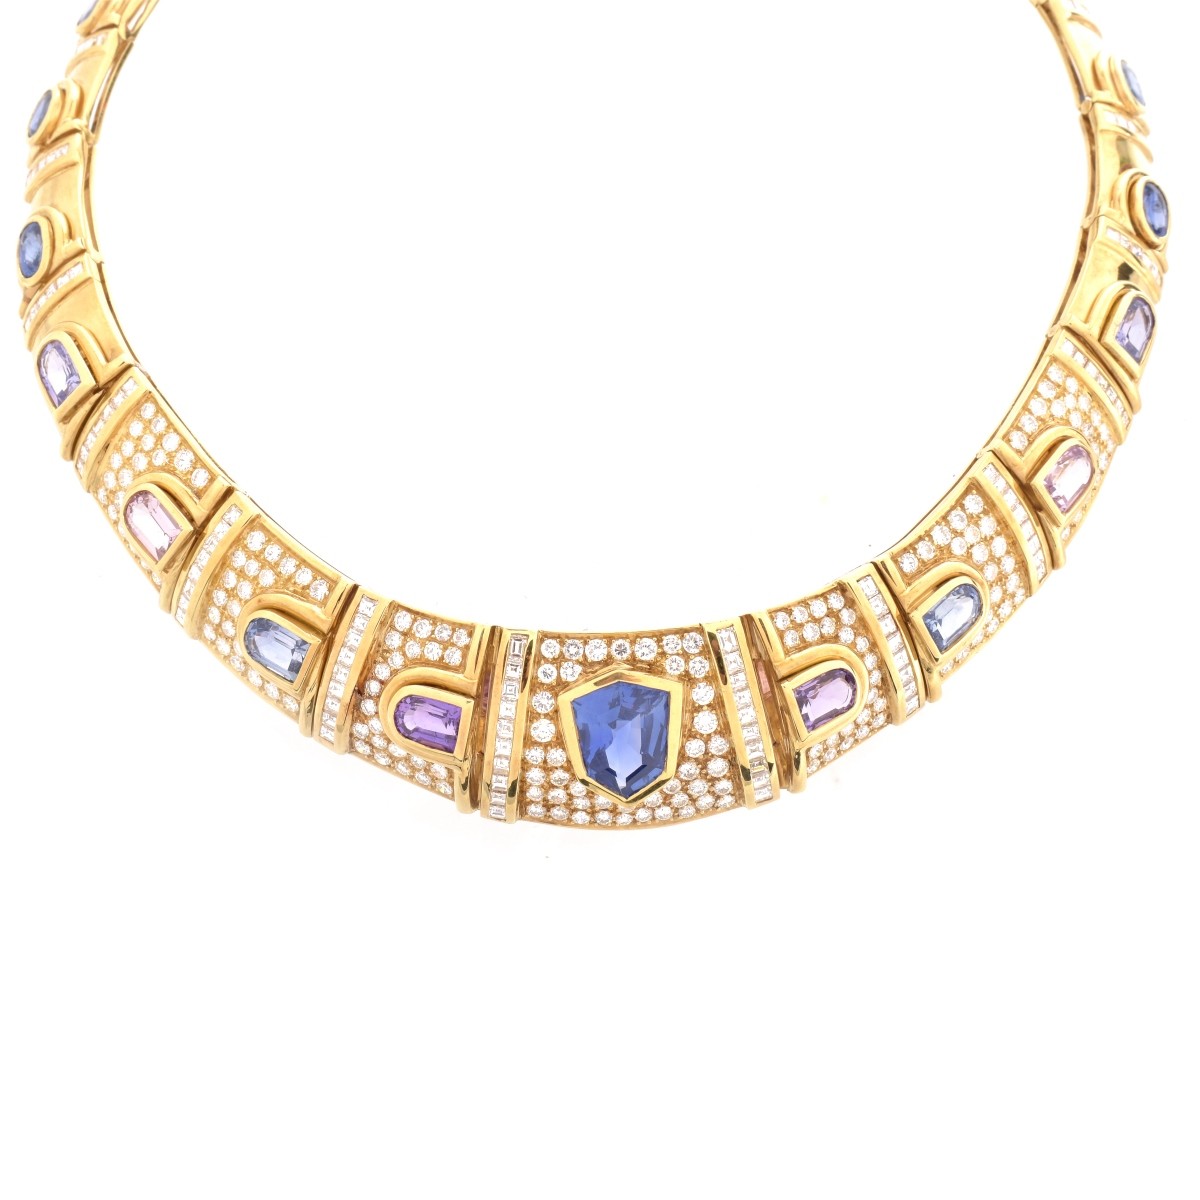 Vintage Sapphire, Diamond and 18K Necklace